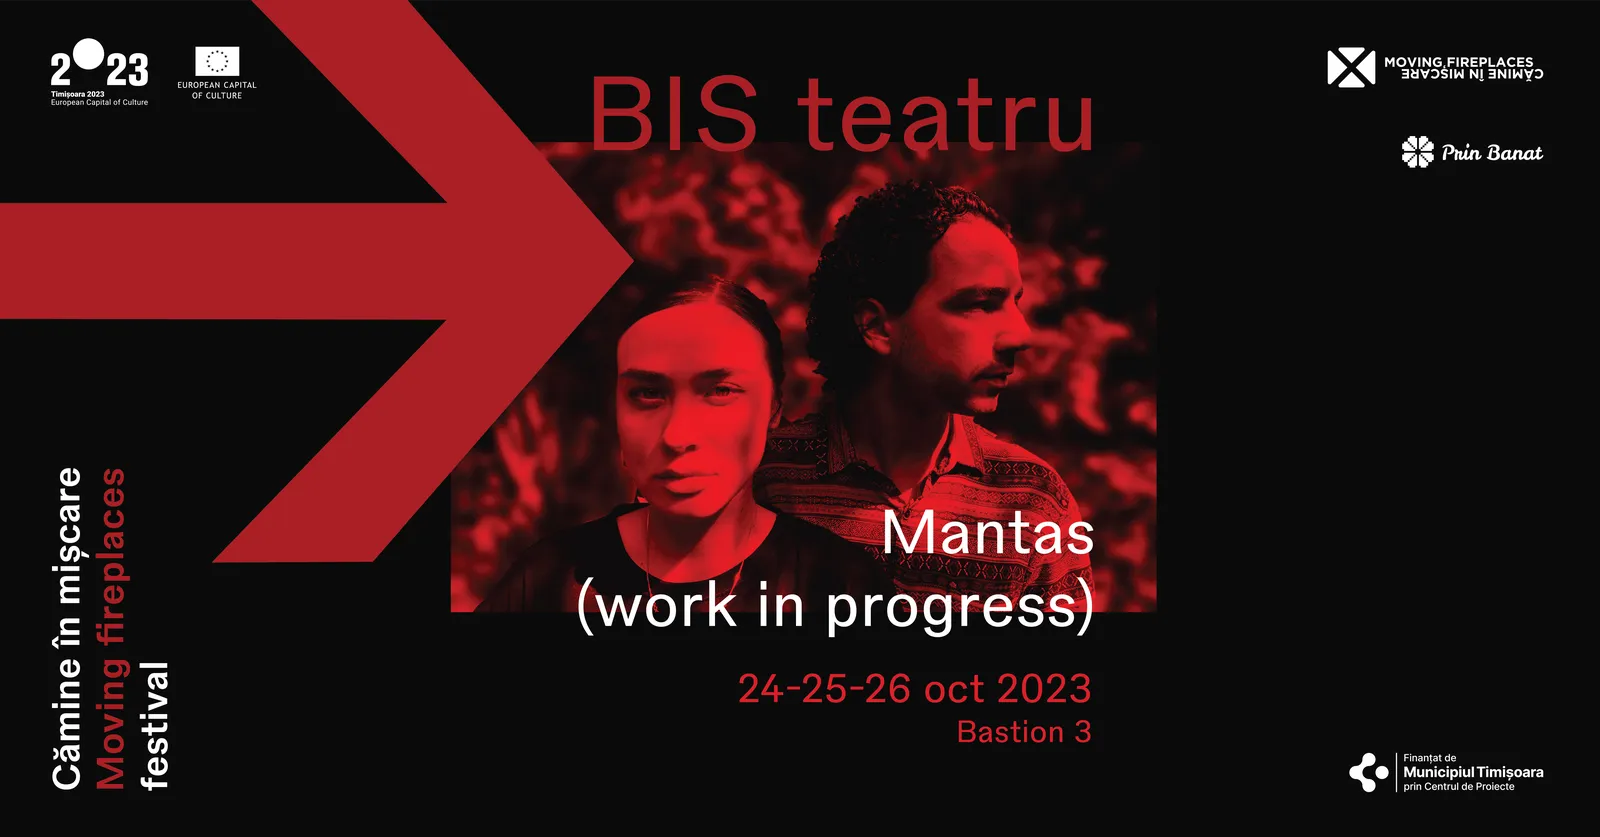 Mantas (work in progress) | Bis Teatru